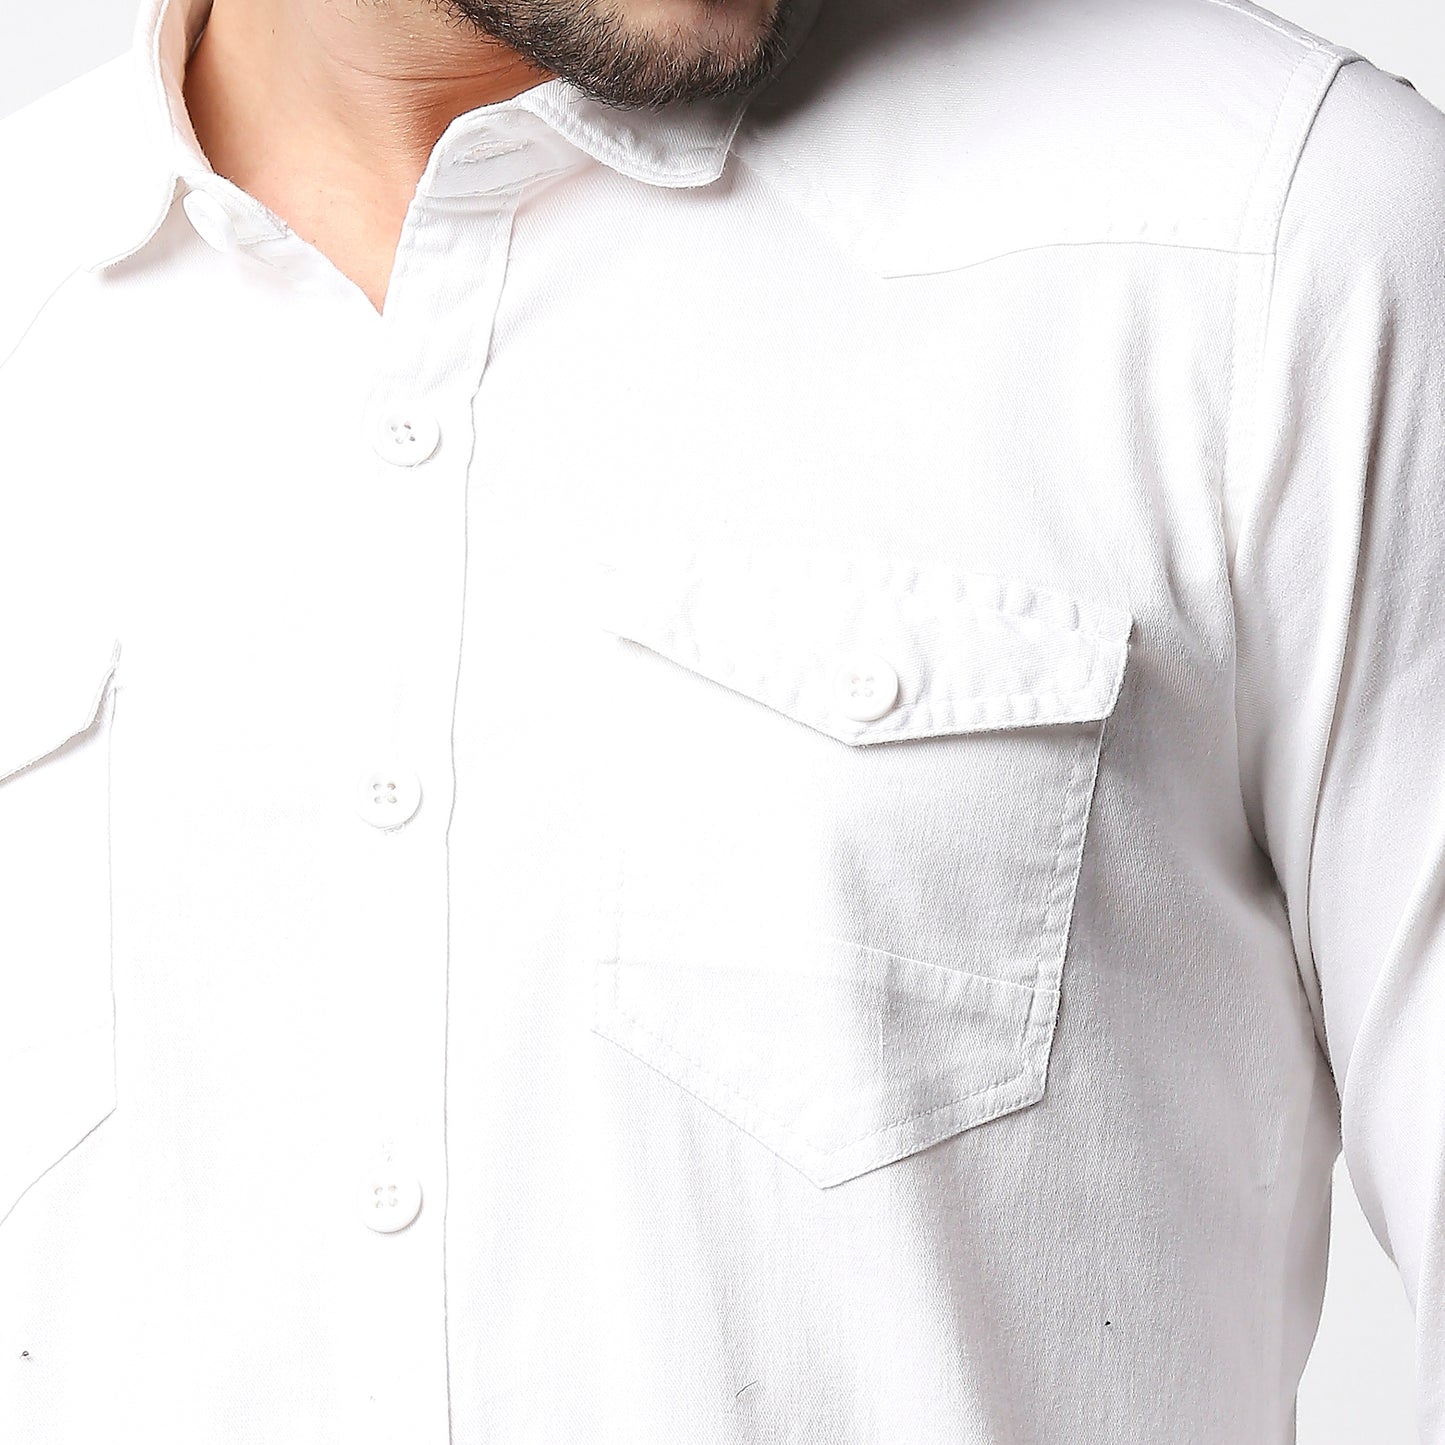 Fostino White Double Pocket Full Sleeves Casual Shirt - Fostino - Shirts